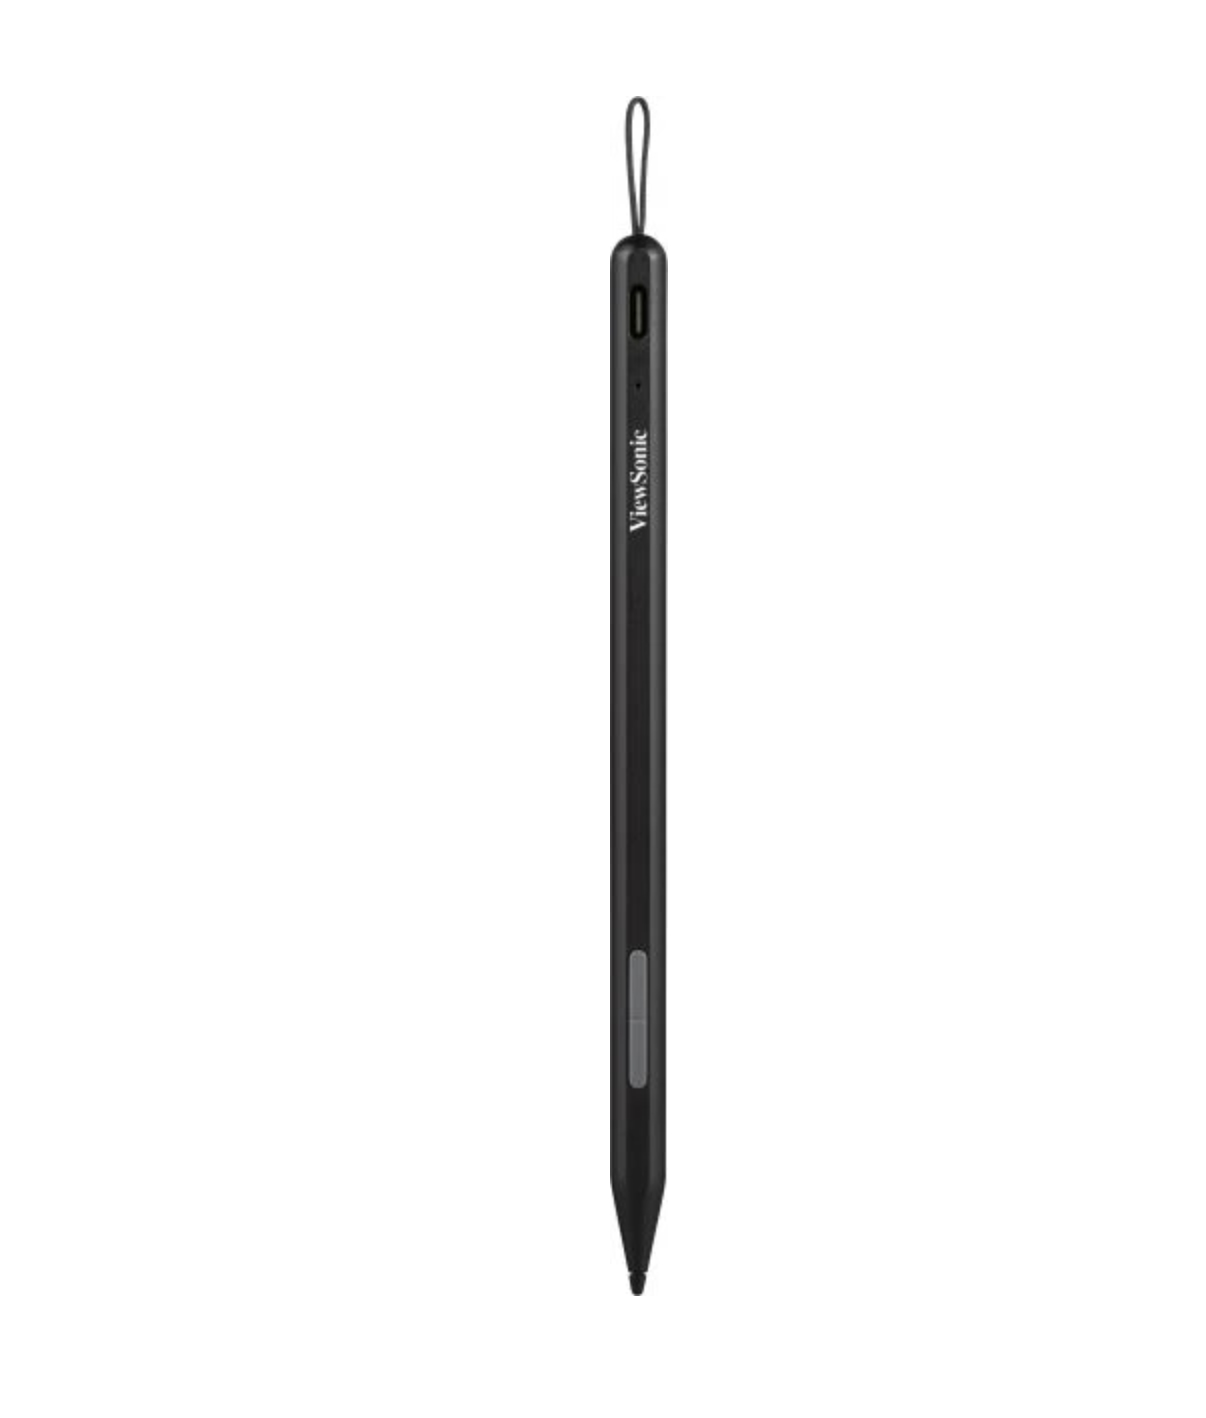 ACP302-B0WW VIEWSONIC AC ACP302-B0WW 8.9mm Active Capacitive Pen for MPP2.0 Black Retail